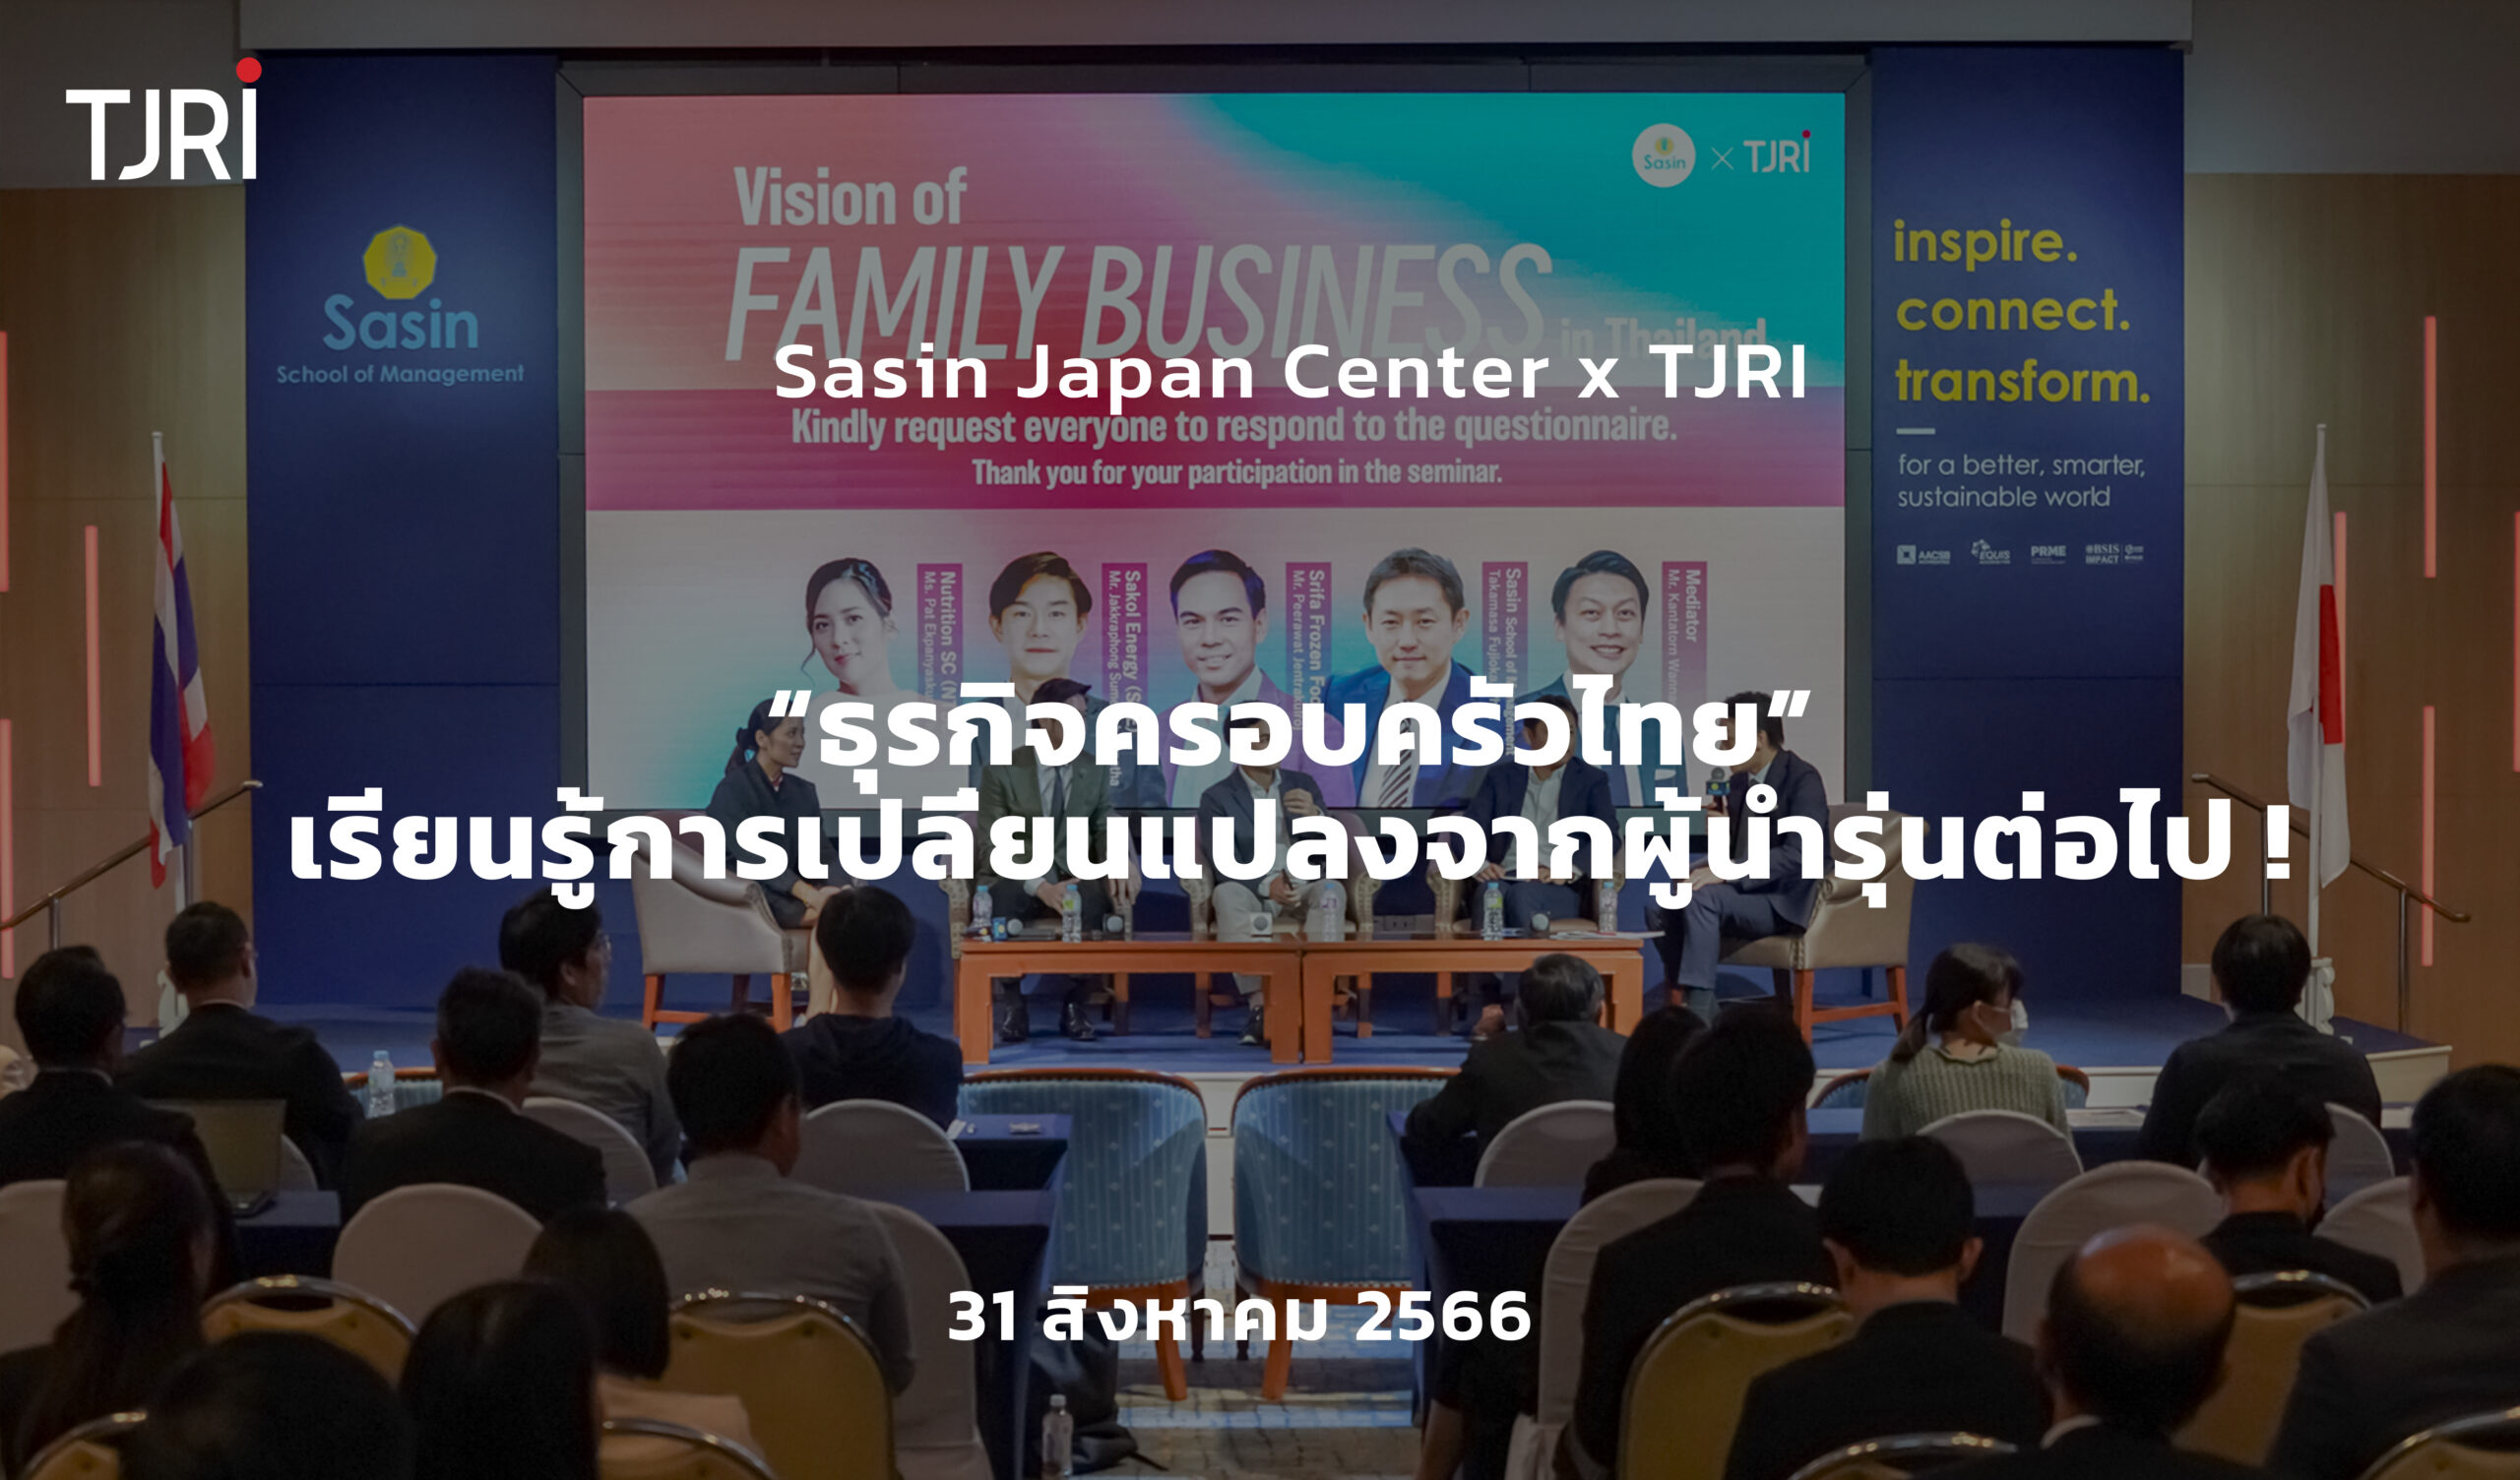 Sasin Japan Center x TJRI จัดสัมมนา “ธุรกิจครอบครัวไทย” เรียนรู้การเปลี่ยนแปลงจากผู้นำรุ่นต่อไป!のメイン画像